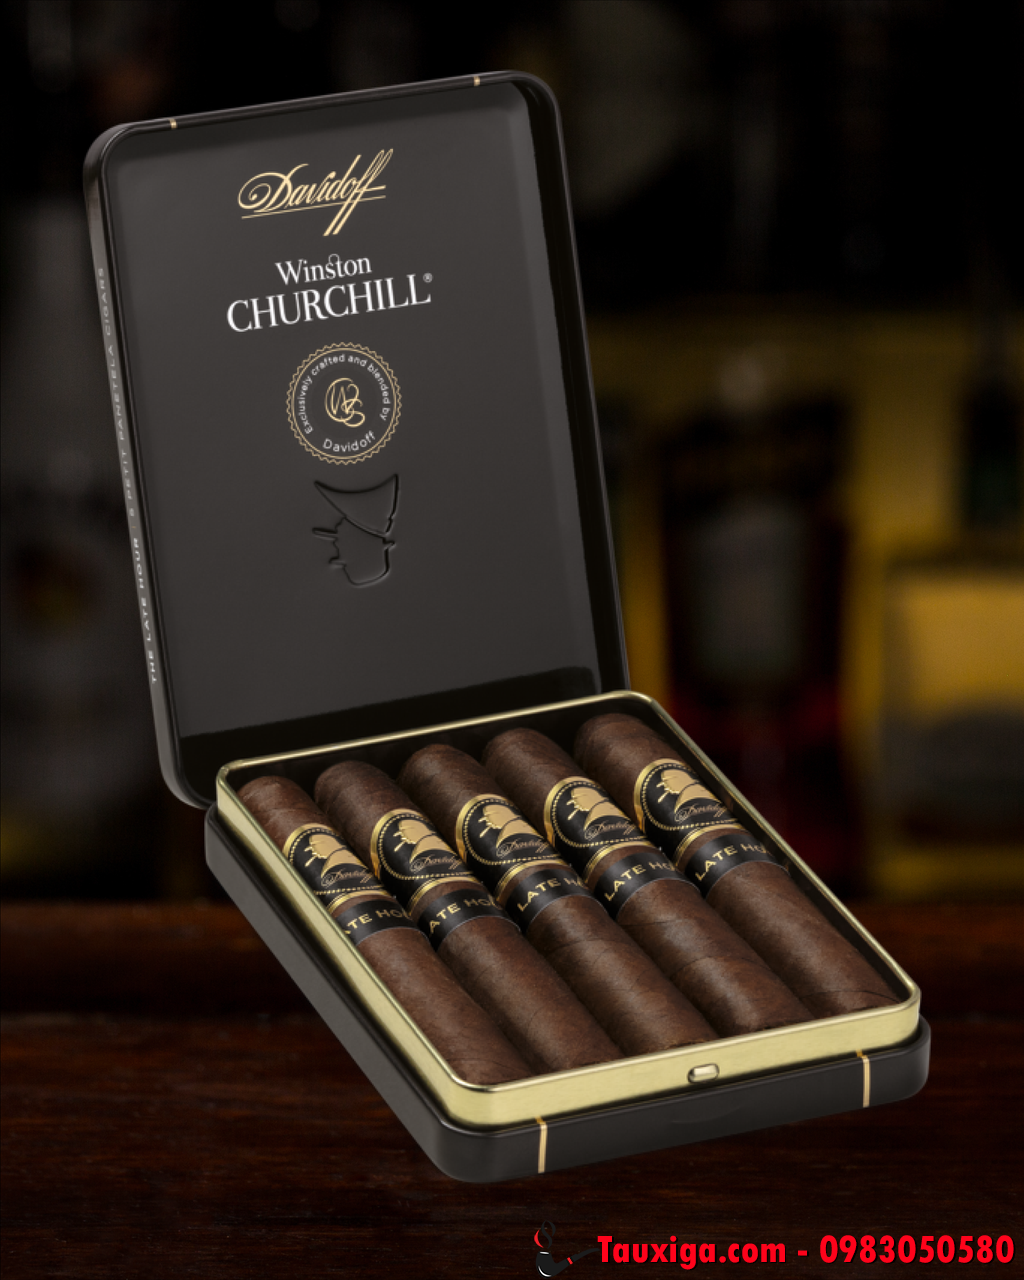 Davidoff Winston Churchill The Late Hour Petit Panetela (5 x 5 Cigars)